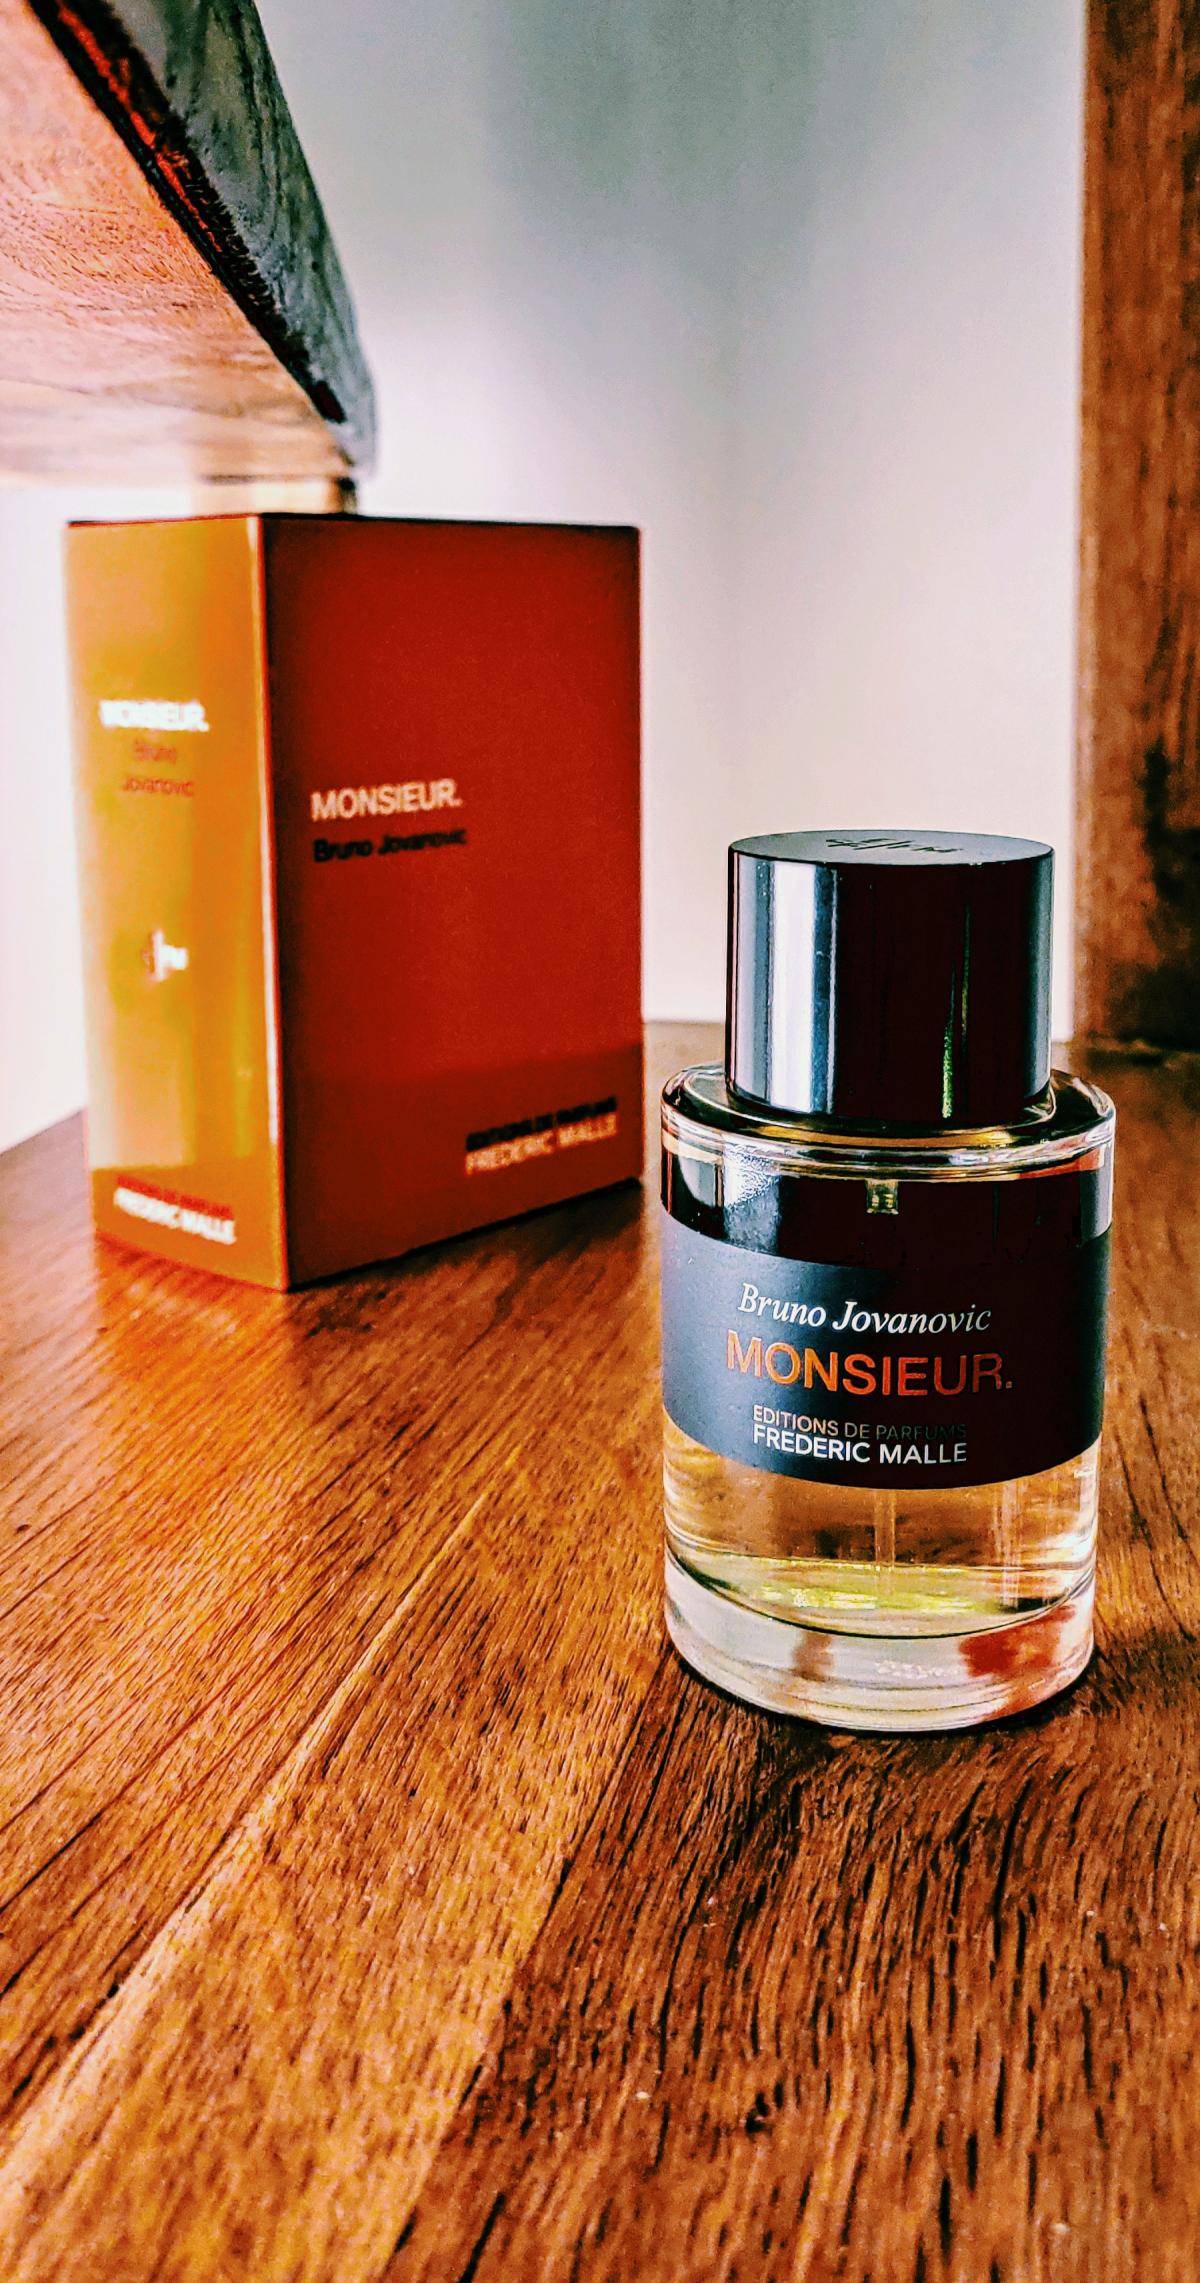 Monsieur Frederic Malle cologne - a fragrance for men 2015